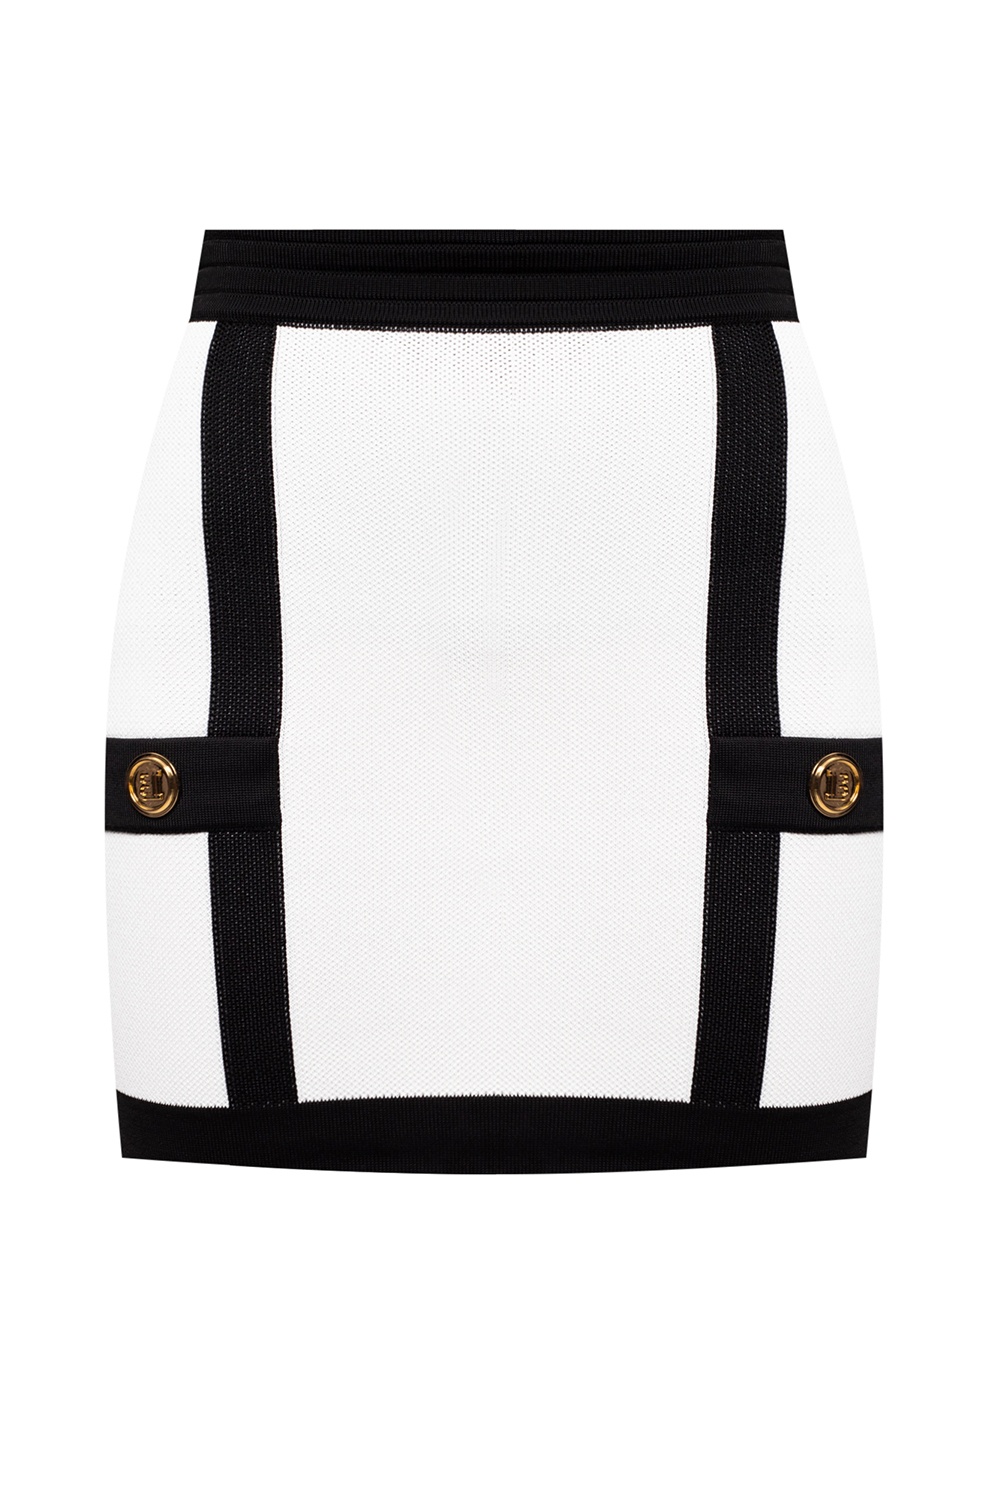 Balmain Short skirt